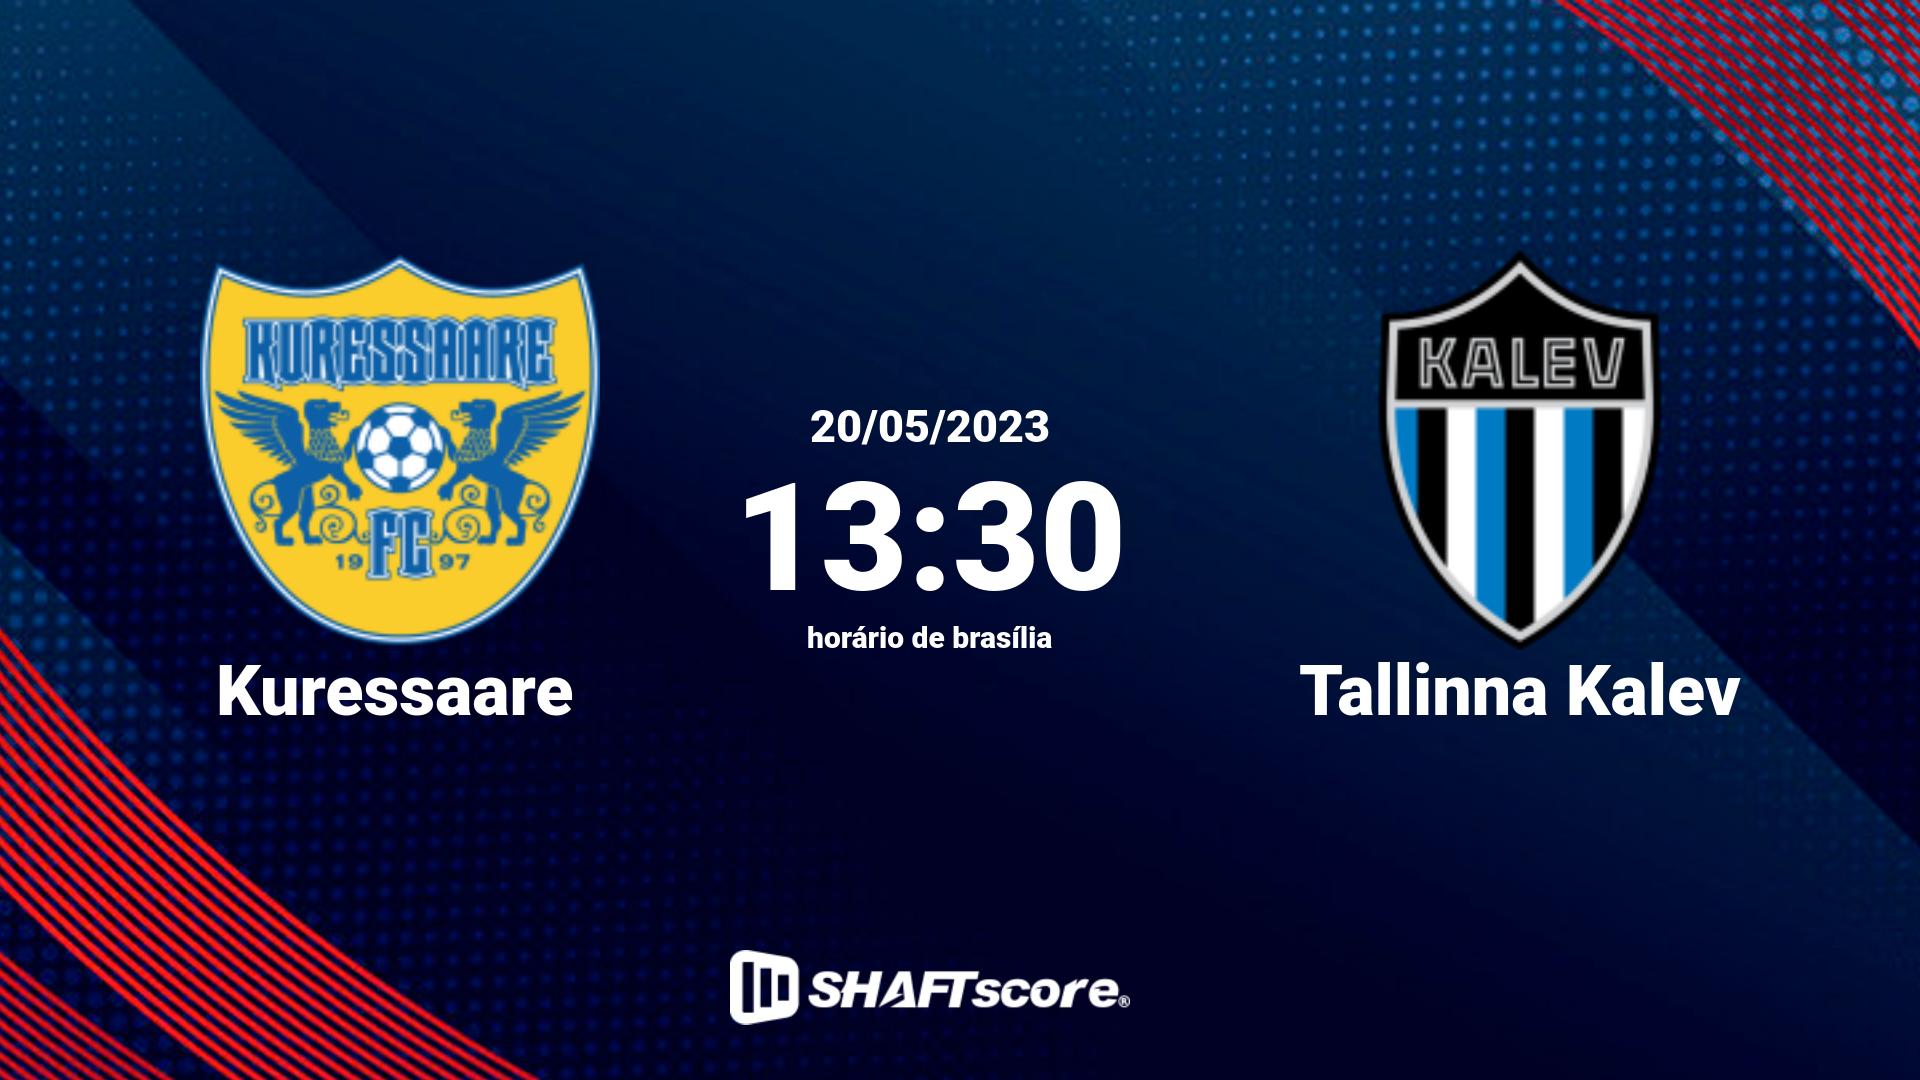 Estatísticas do jogo Kuressaare vs Tallinna Kalev 20.05 13:30